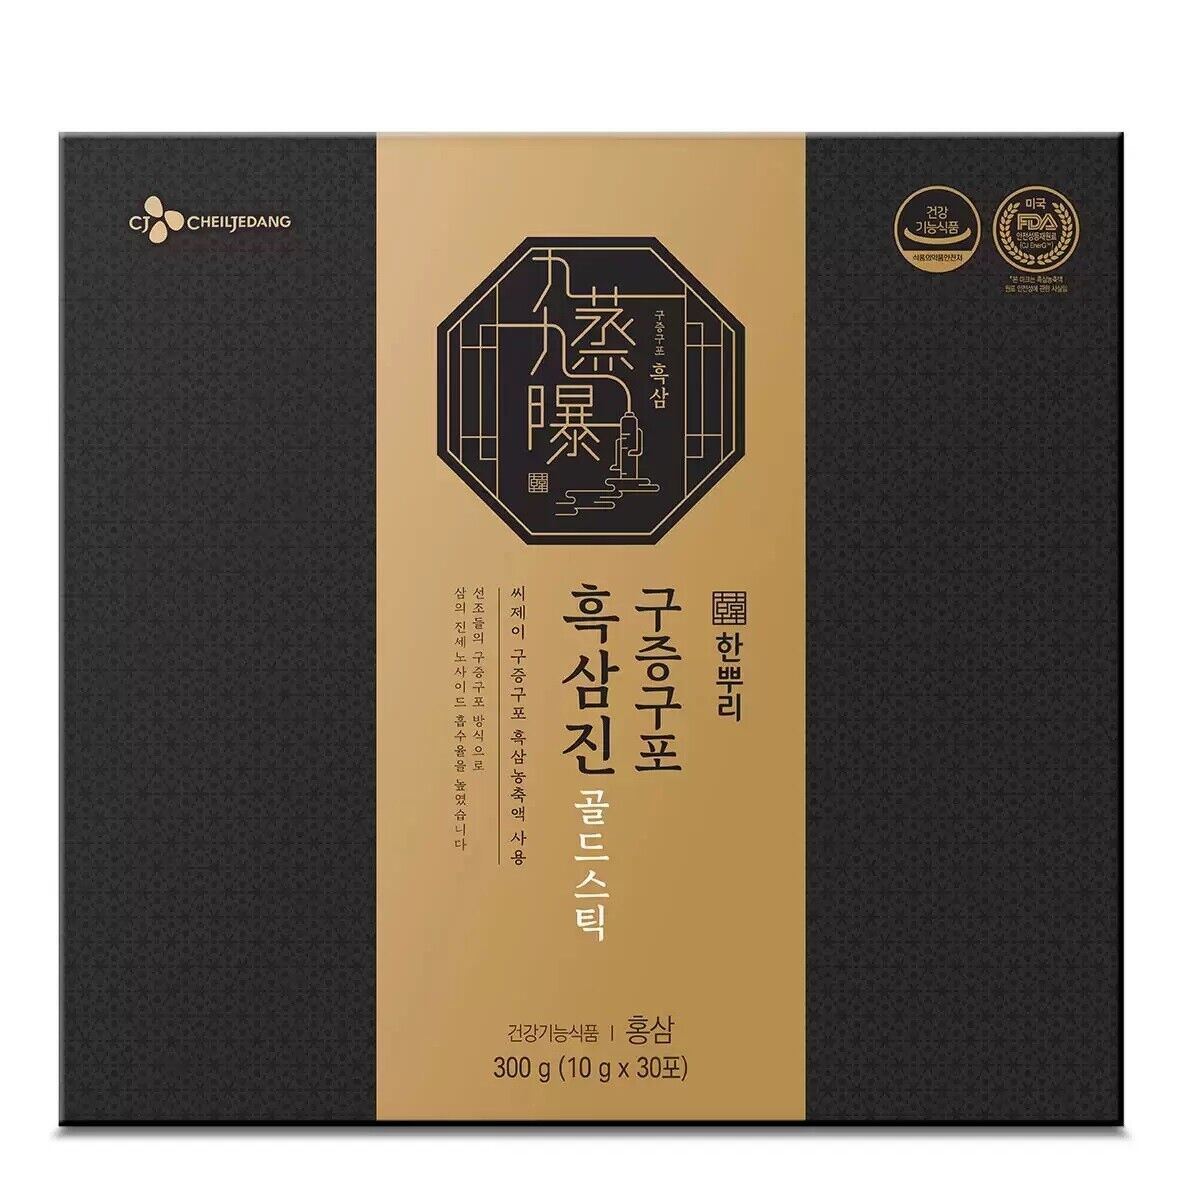 CJ Black Ginseng Gold Stick 10g x 30ct/Immune/Absorption Rate/FDA/US Express